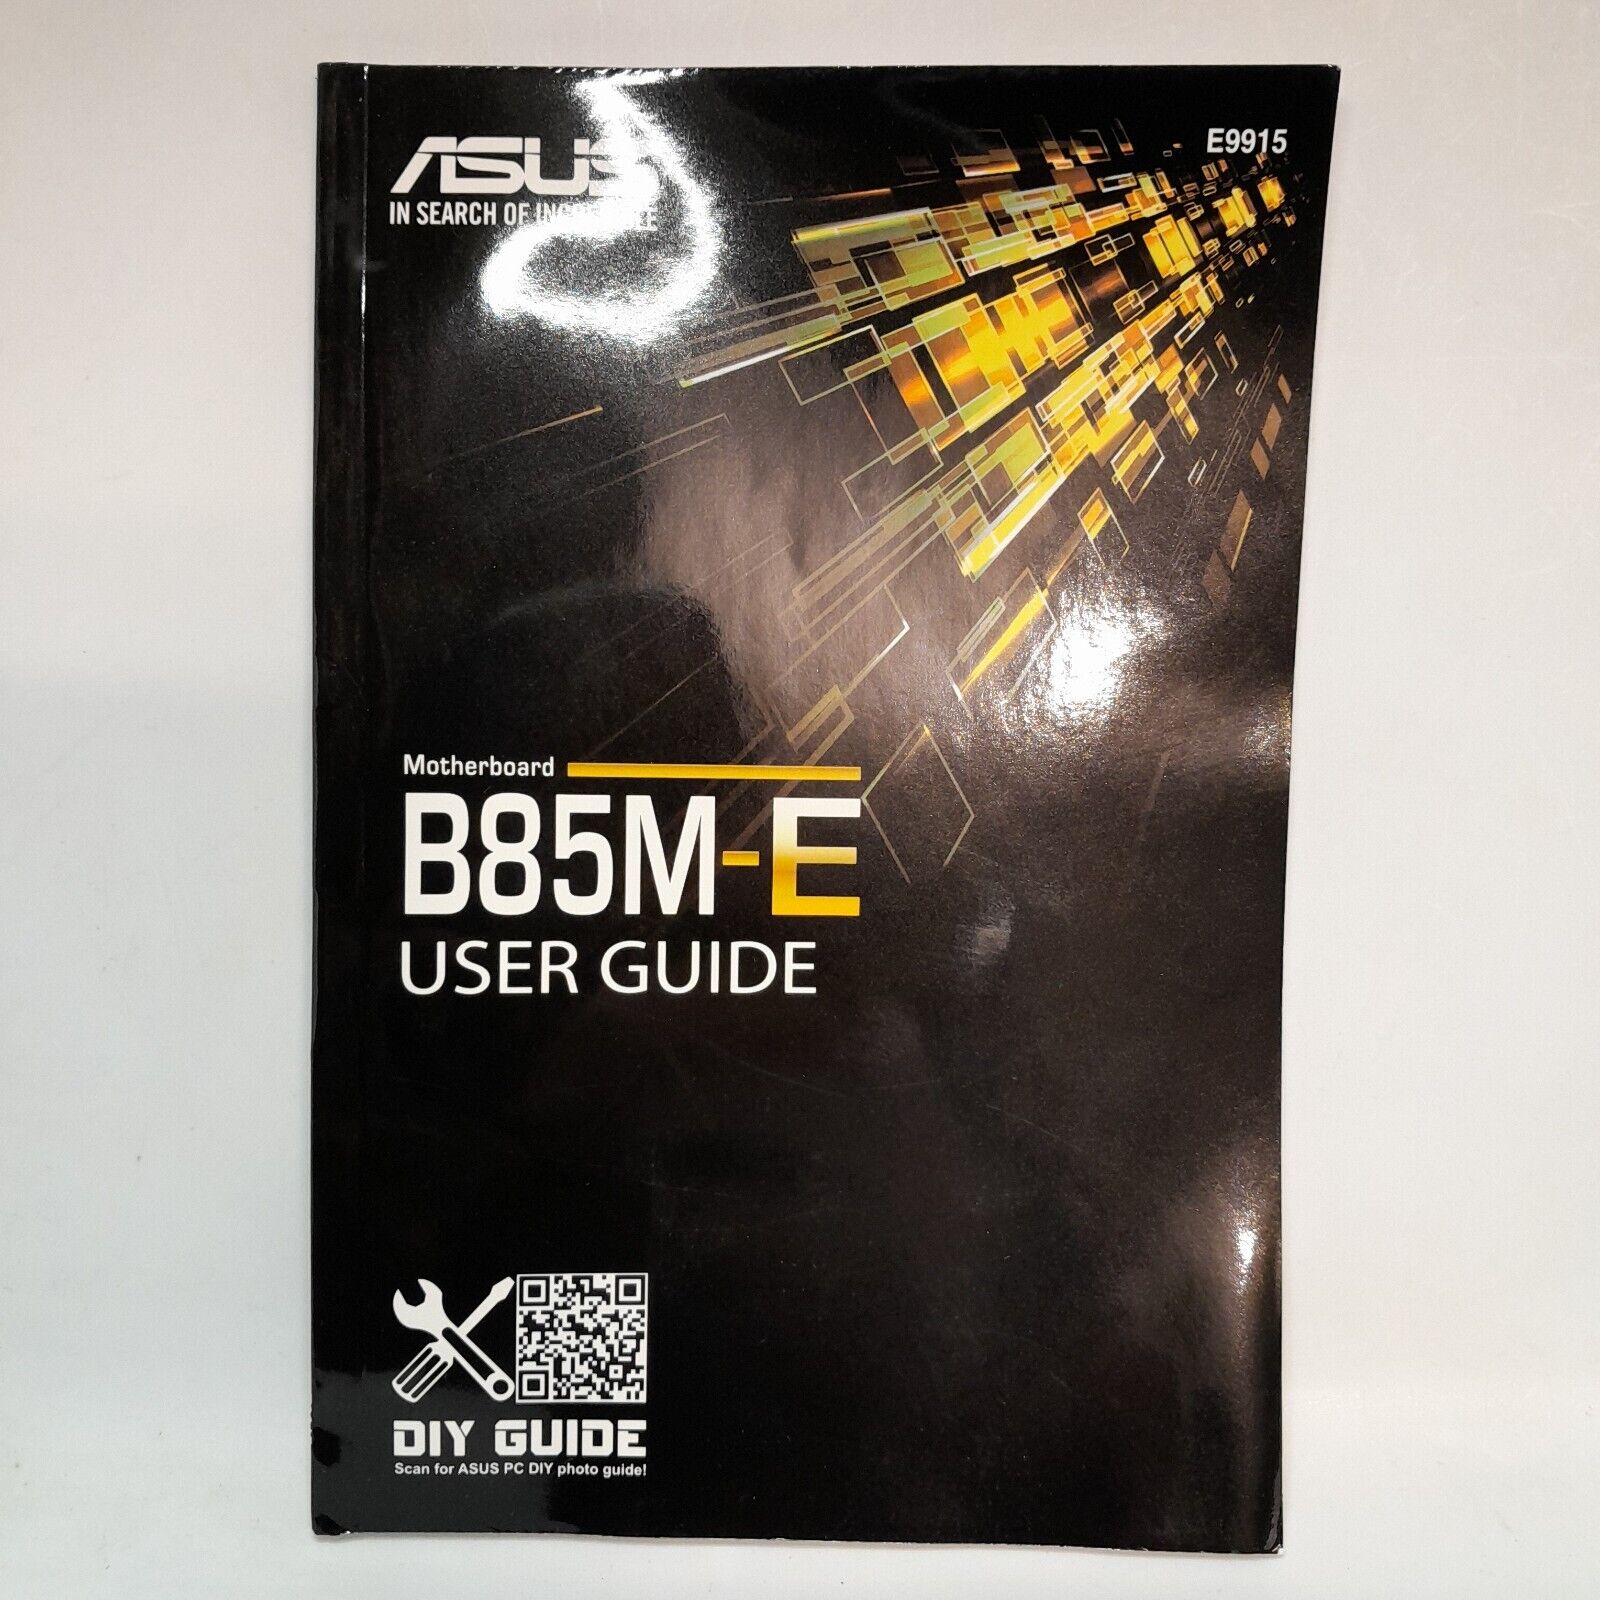 ASUS B85M-E Motherboard User Guide E9915 Instruction Book Manual